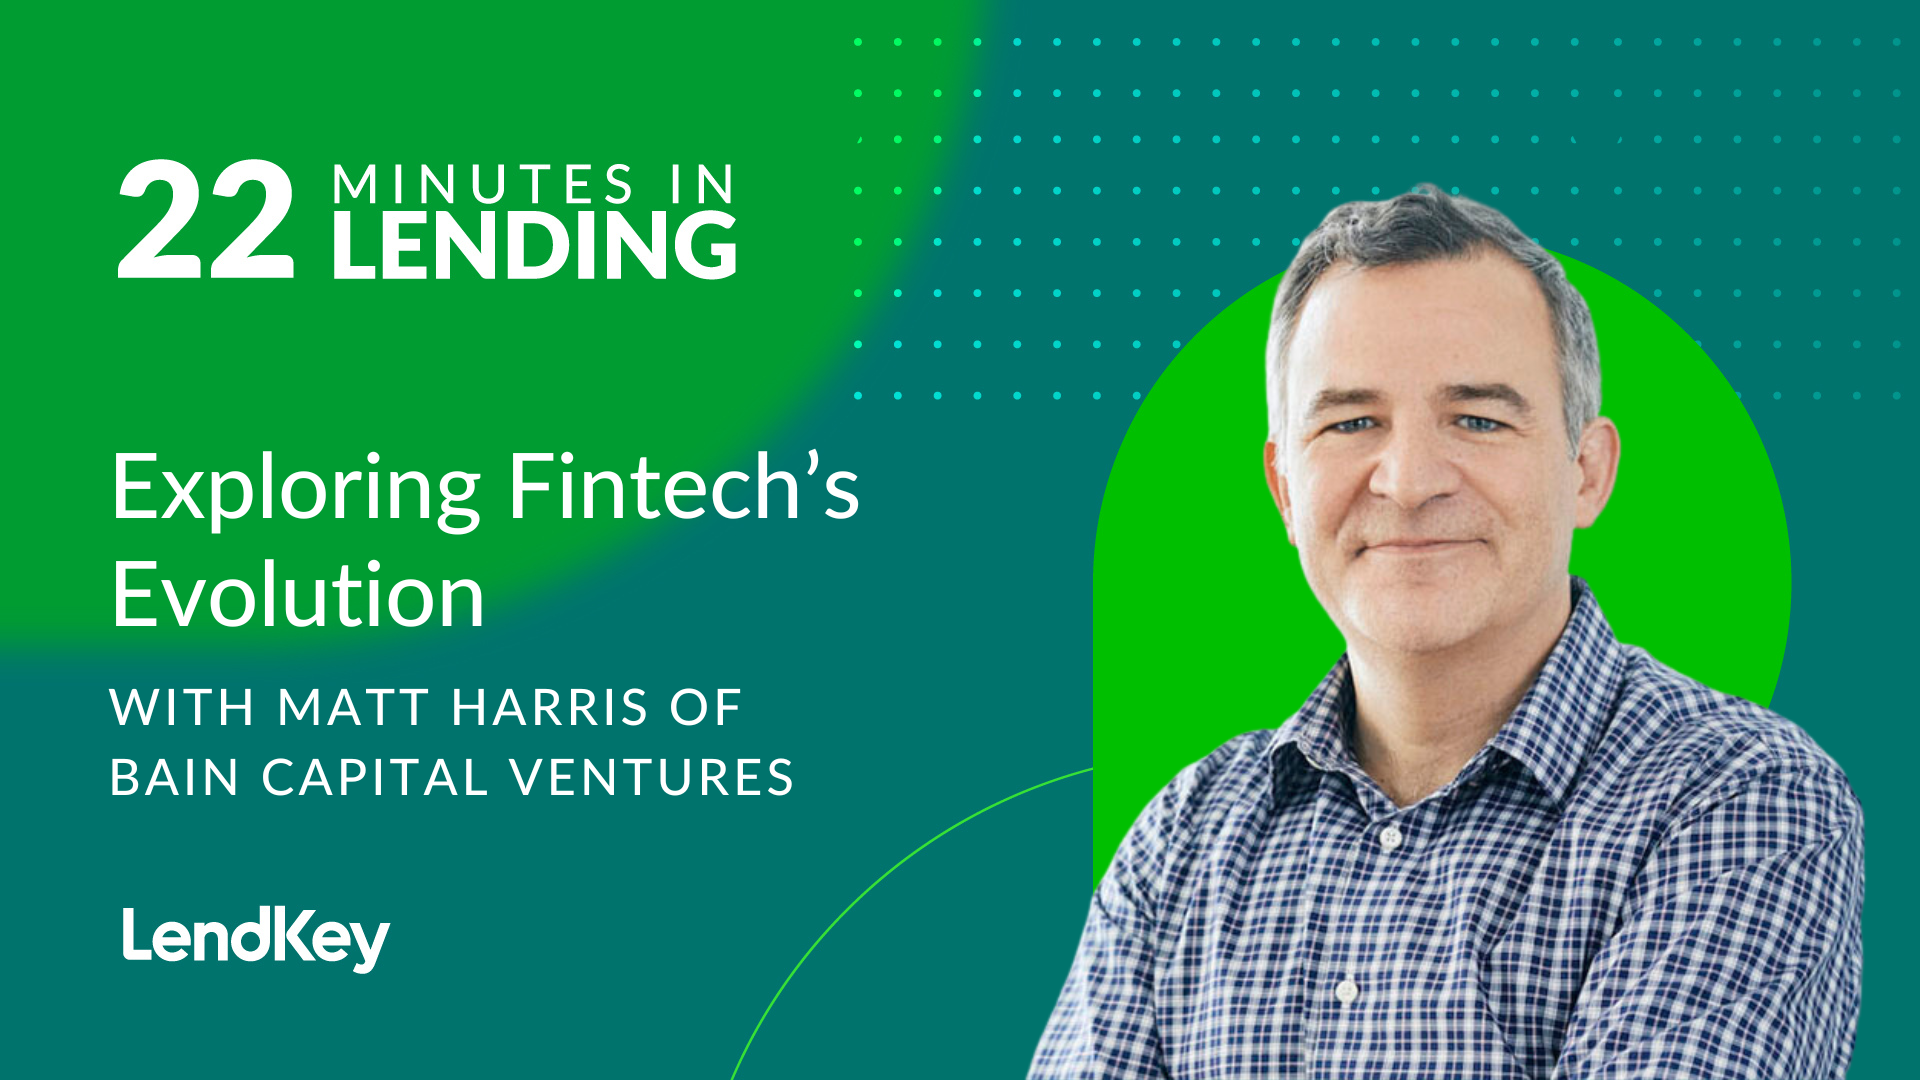 Featured image for “Exploring Fintech’s Evolution with Matt Harris of Bain Capital Ventures”